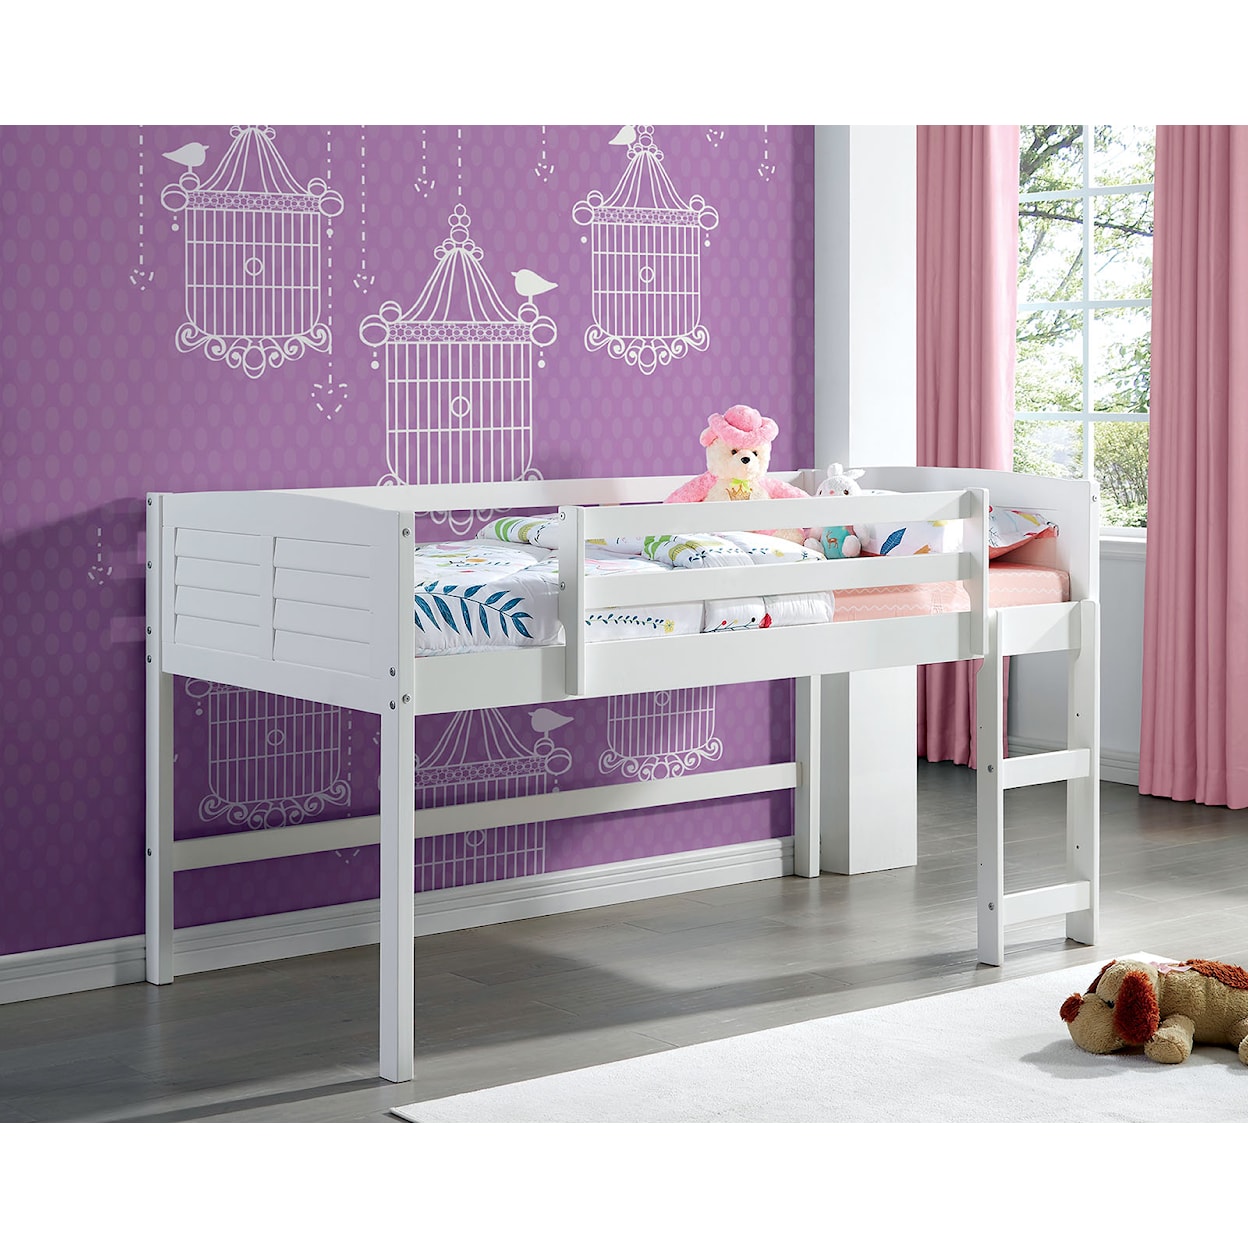 FUSA Abigail Twin Size Loft Bed